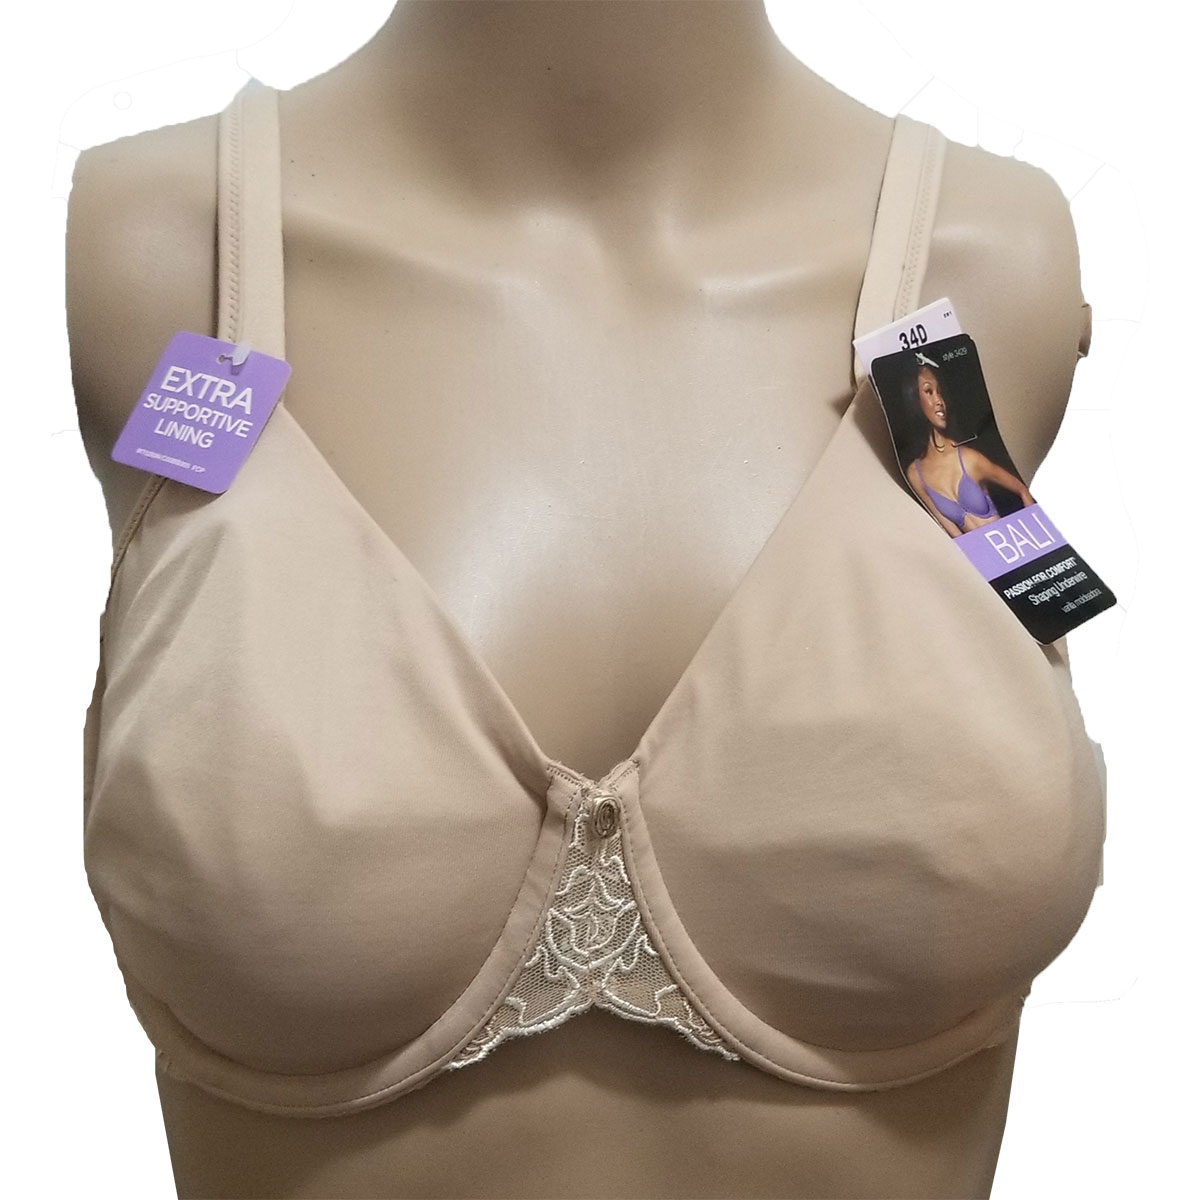 https://www.affordabledesignerbrands.com/pub/media/catalog/product/b/a/bal-wmns-3429-nude-34d-bras.jpg